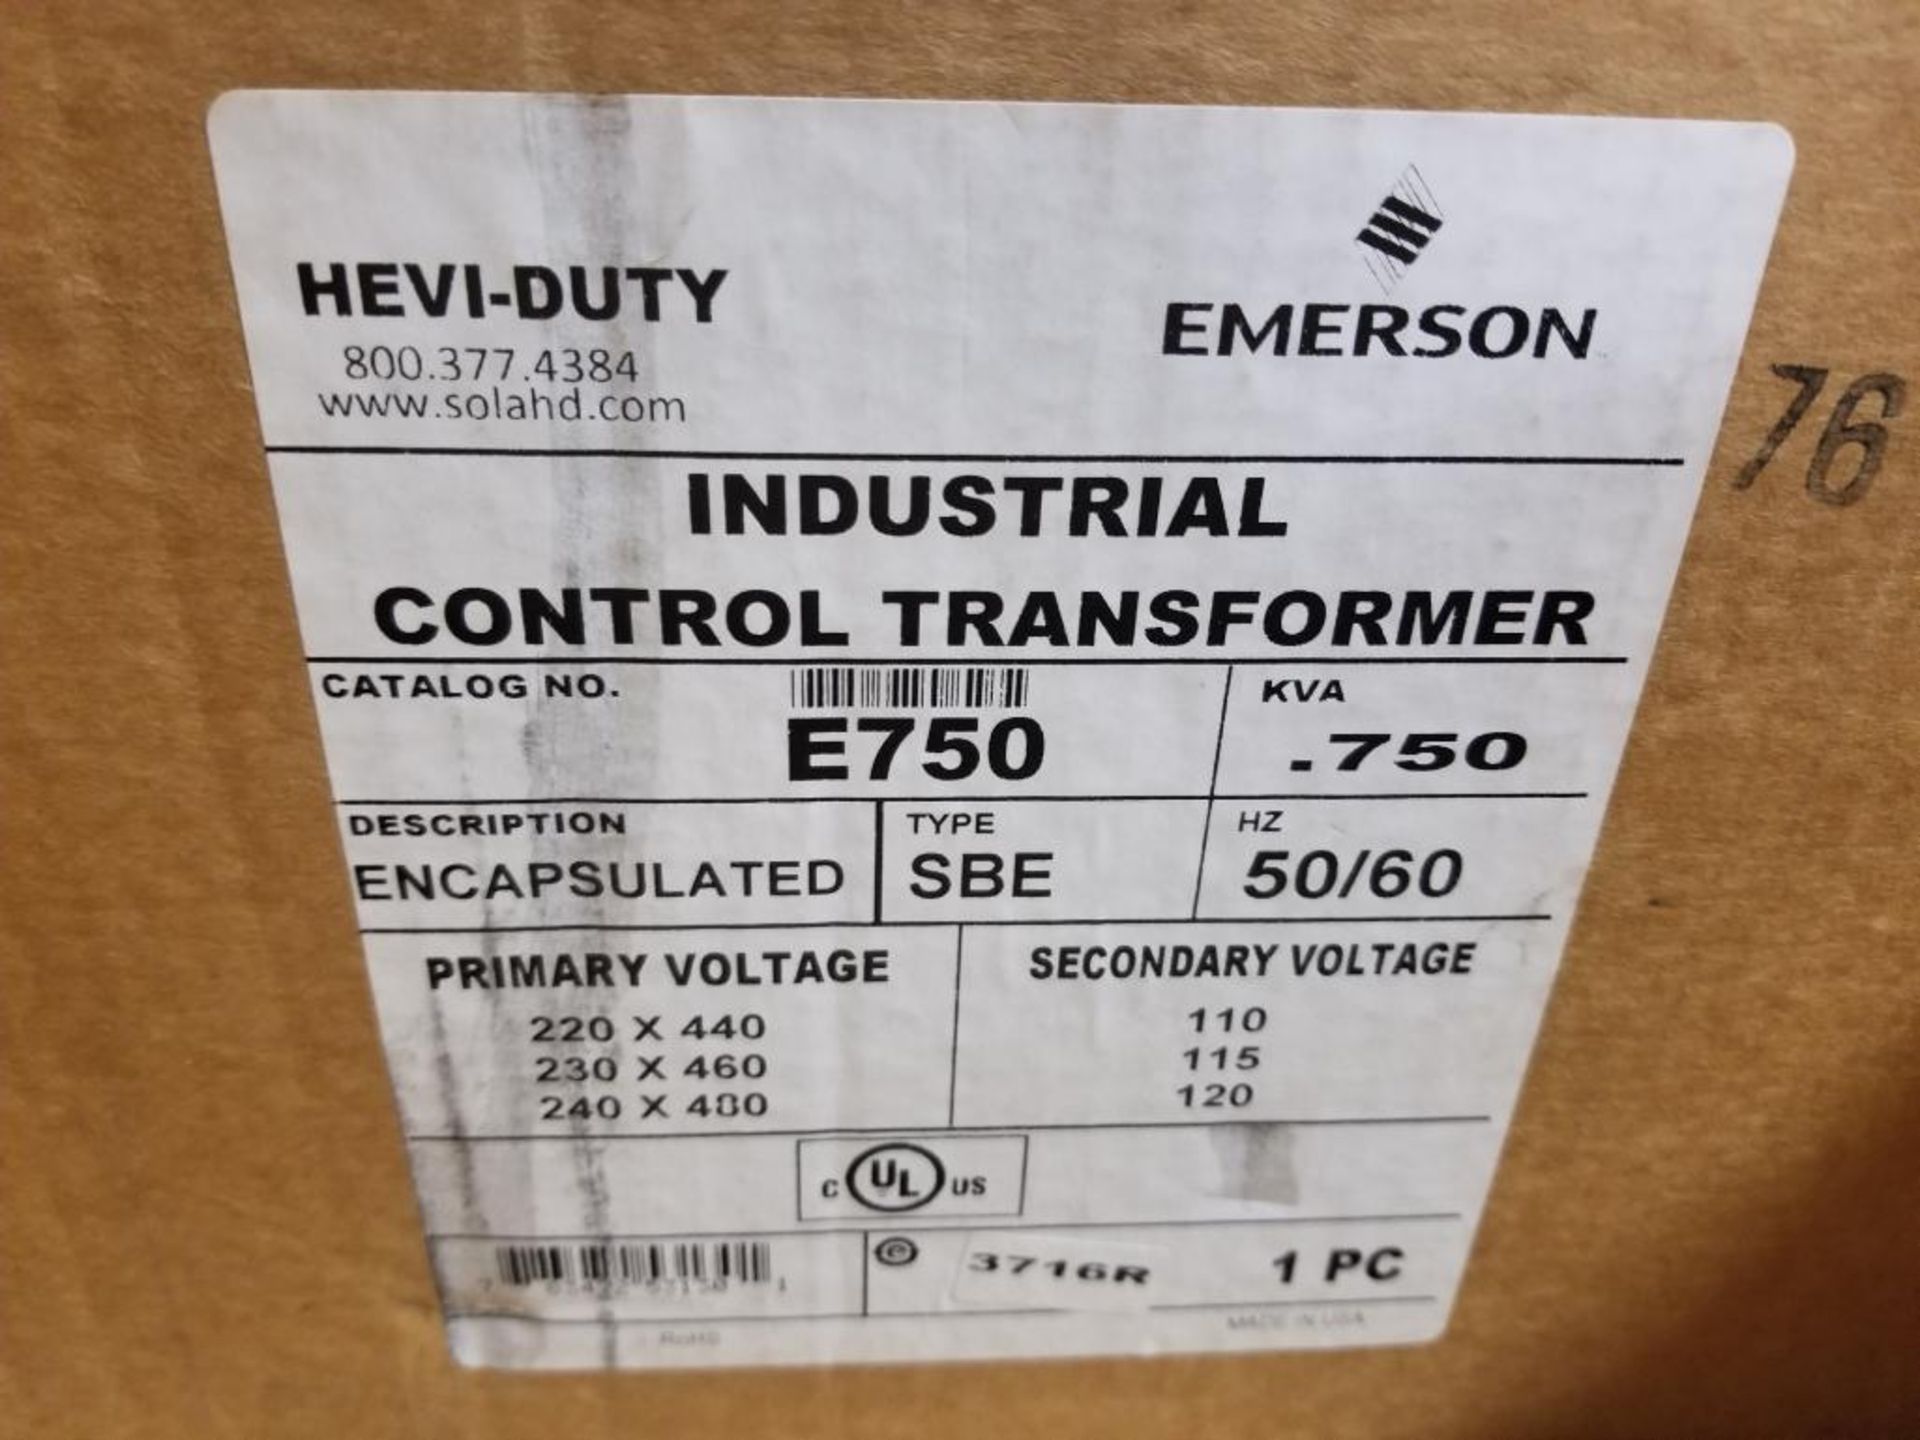 Emerson Hevi-Duty E750 industrial control transformer. New in box. - Image 2 of 2